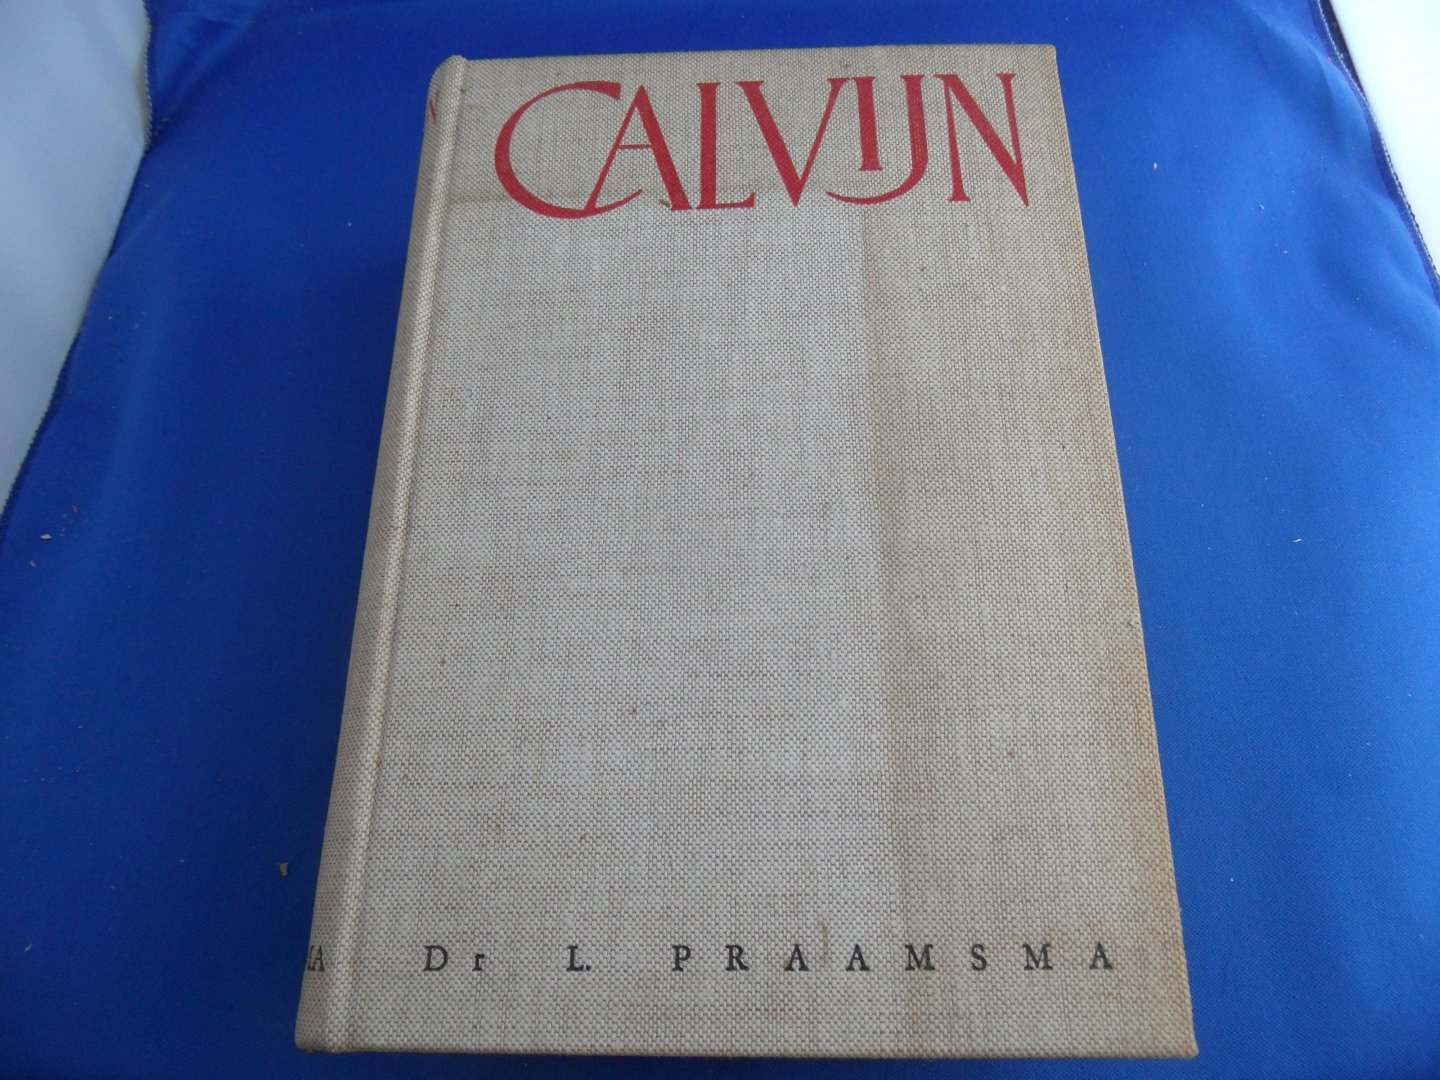 Praamsma, Dr. L. - Calvijn